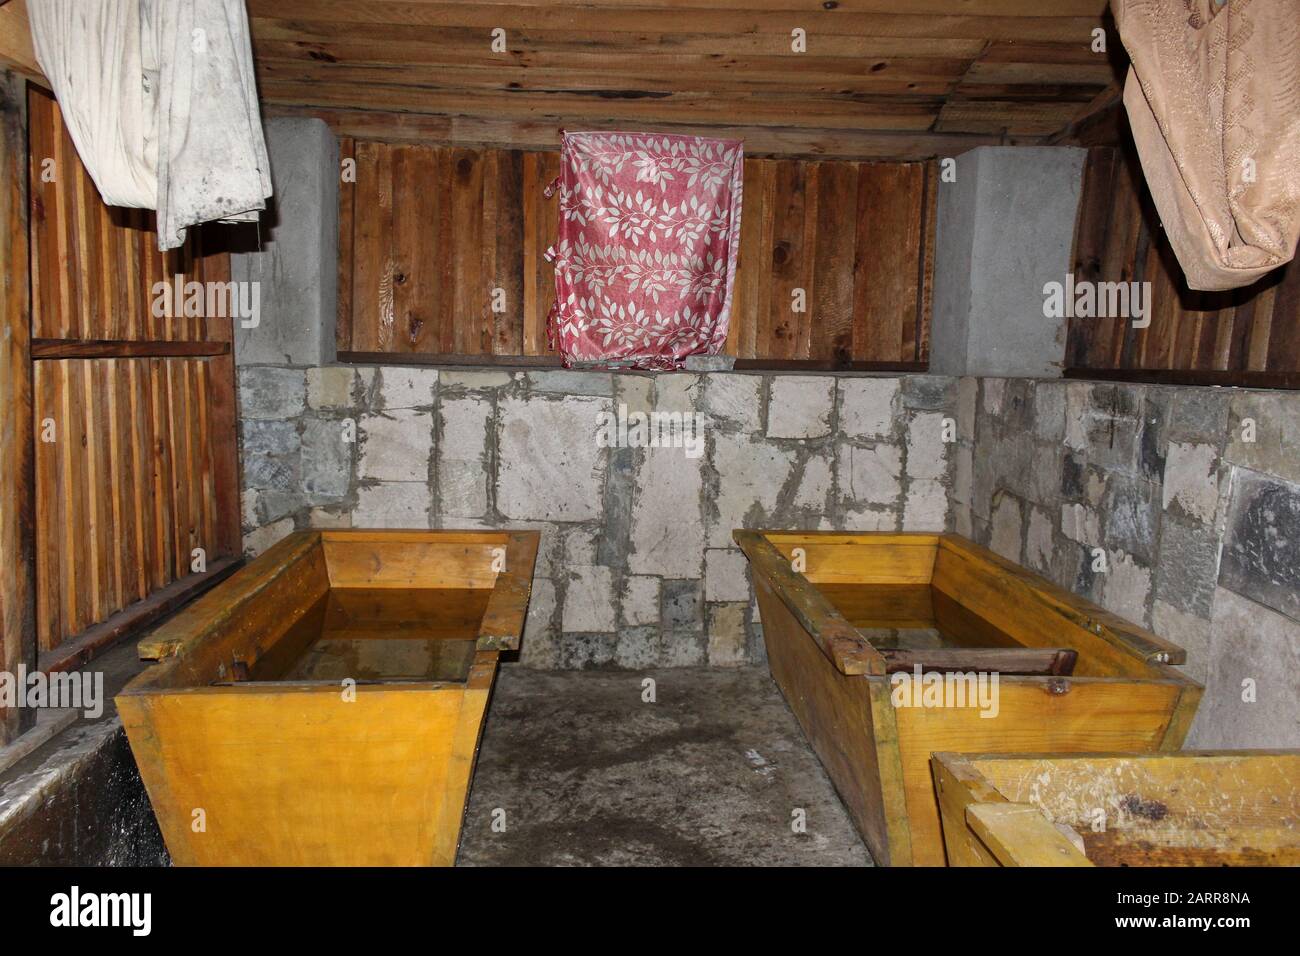 Vasche da bagno in legno per bagni in pietra calda in un bagno a Paro Bhutan Foto Stock